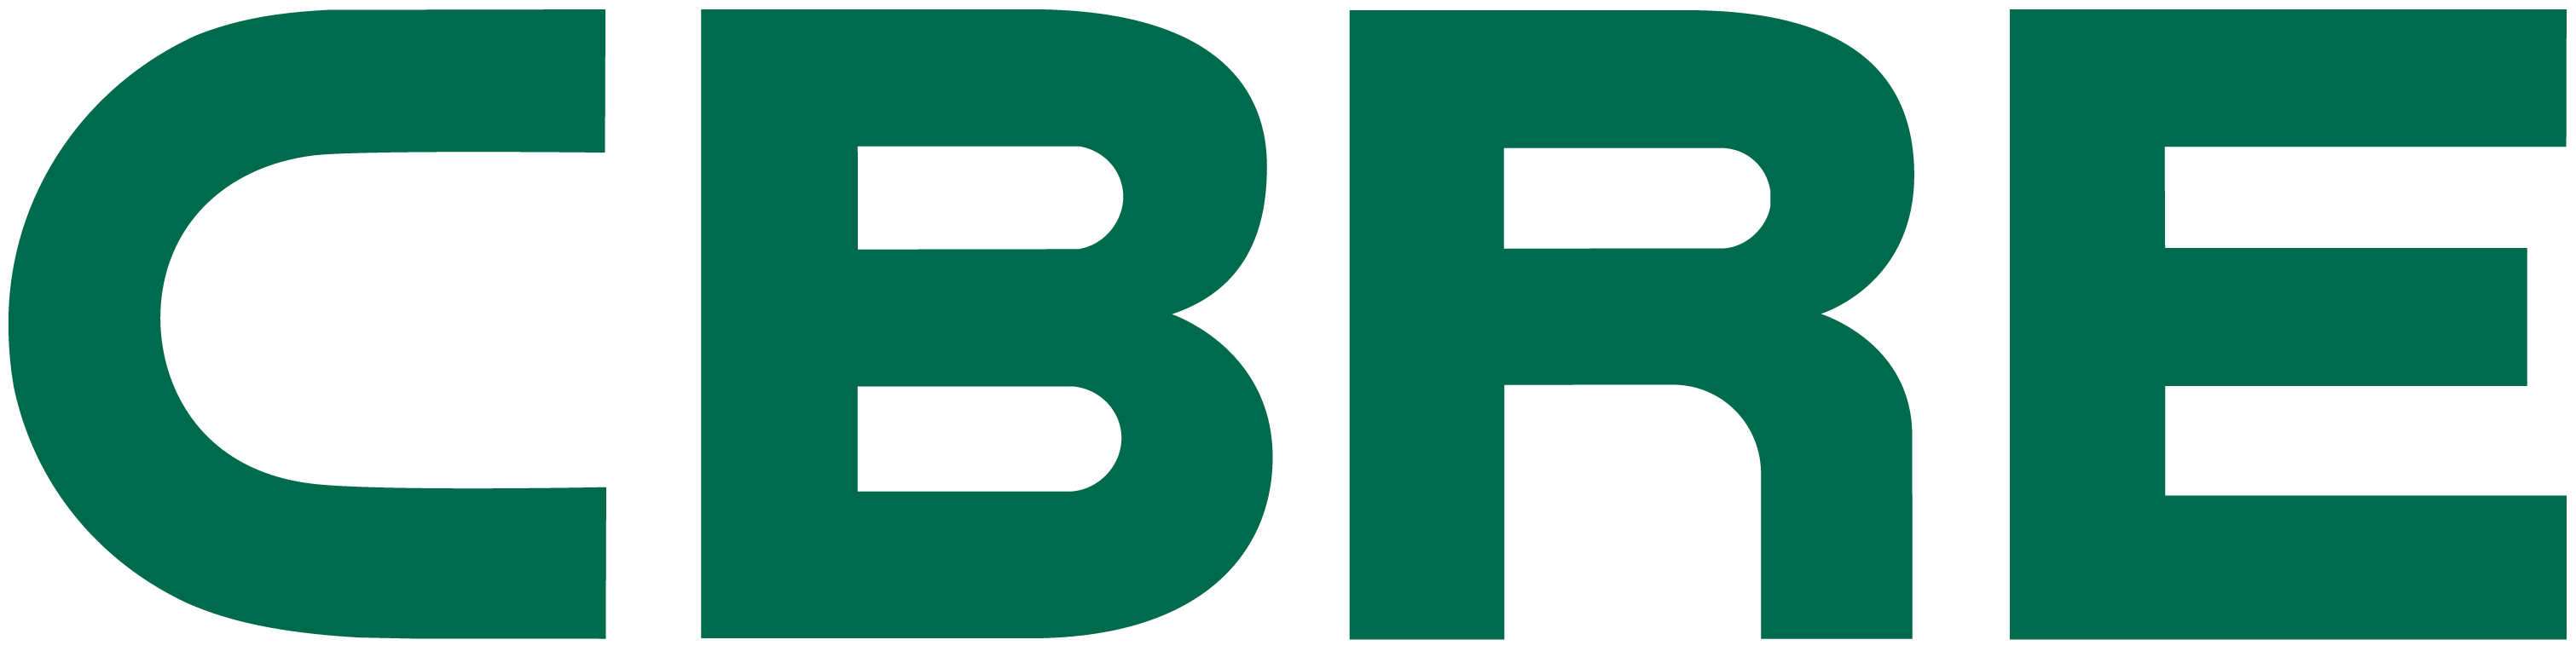 Cbre Pte. Ltd. company logo